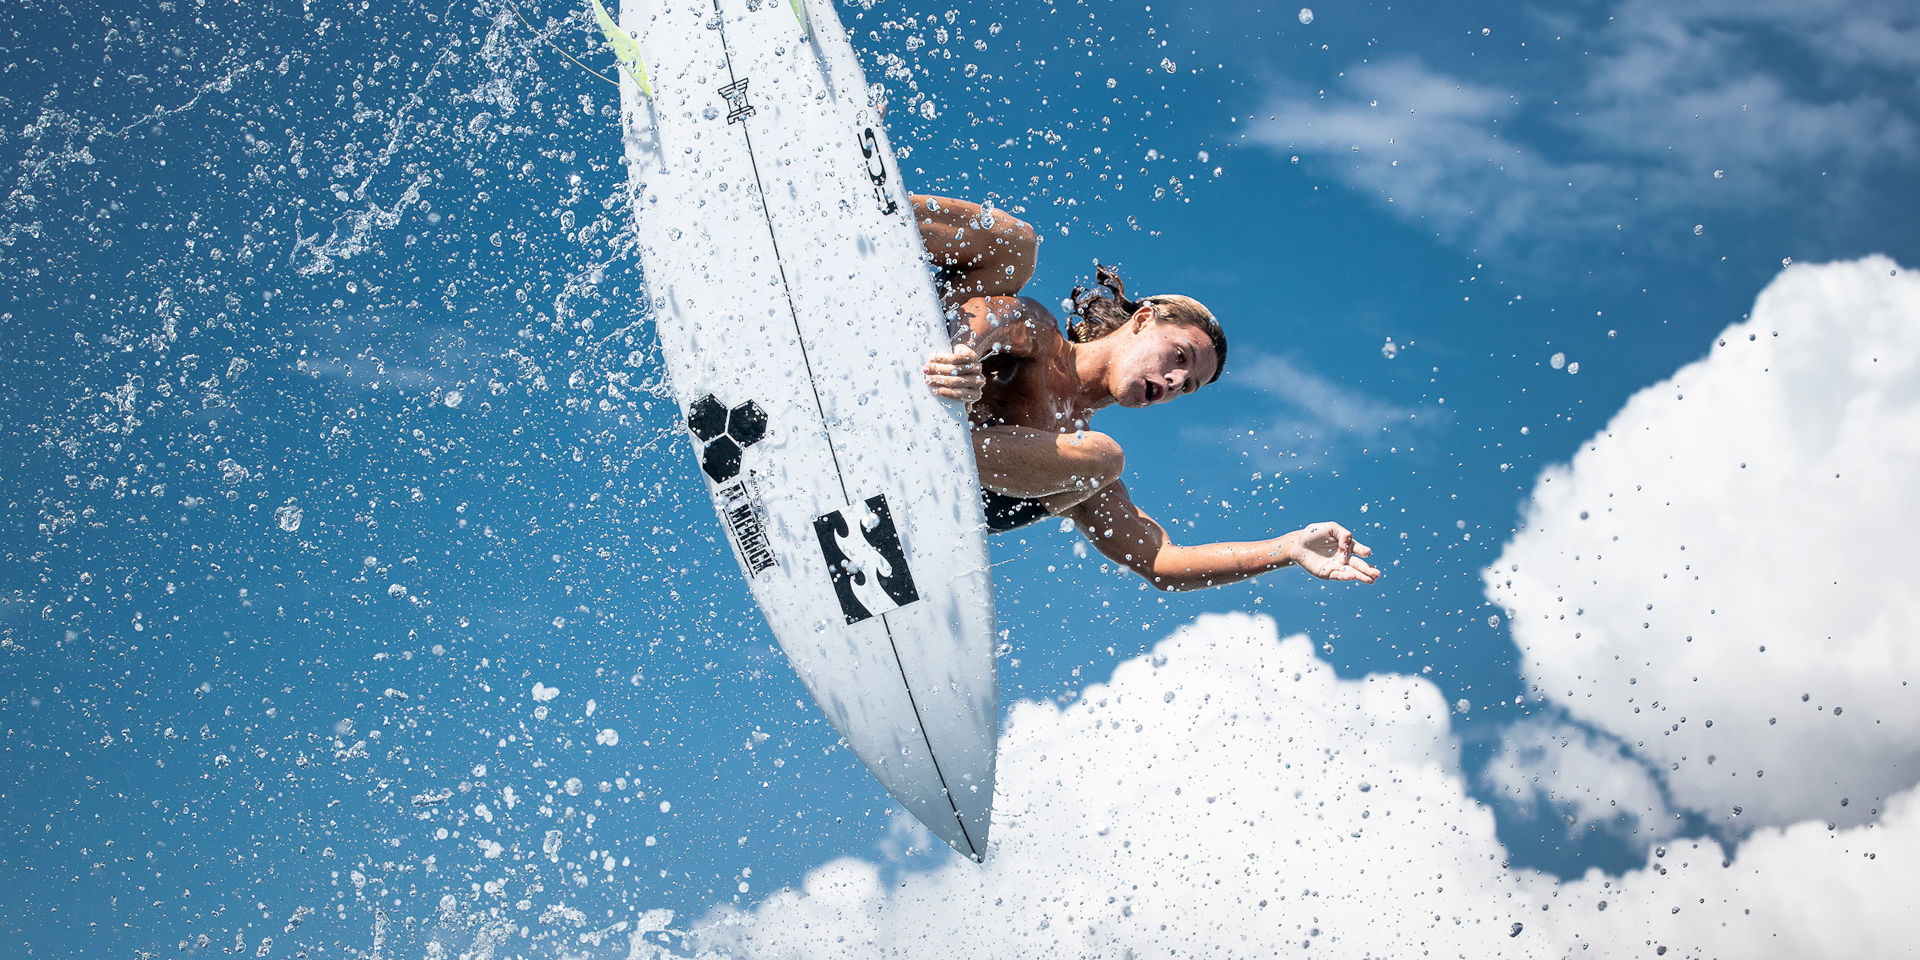 Explore Bali's Surfspots all around the island